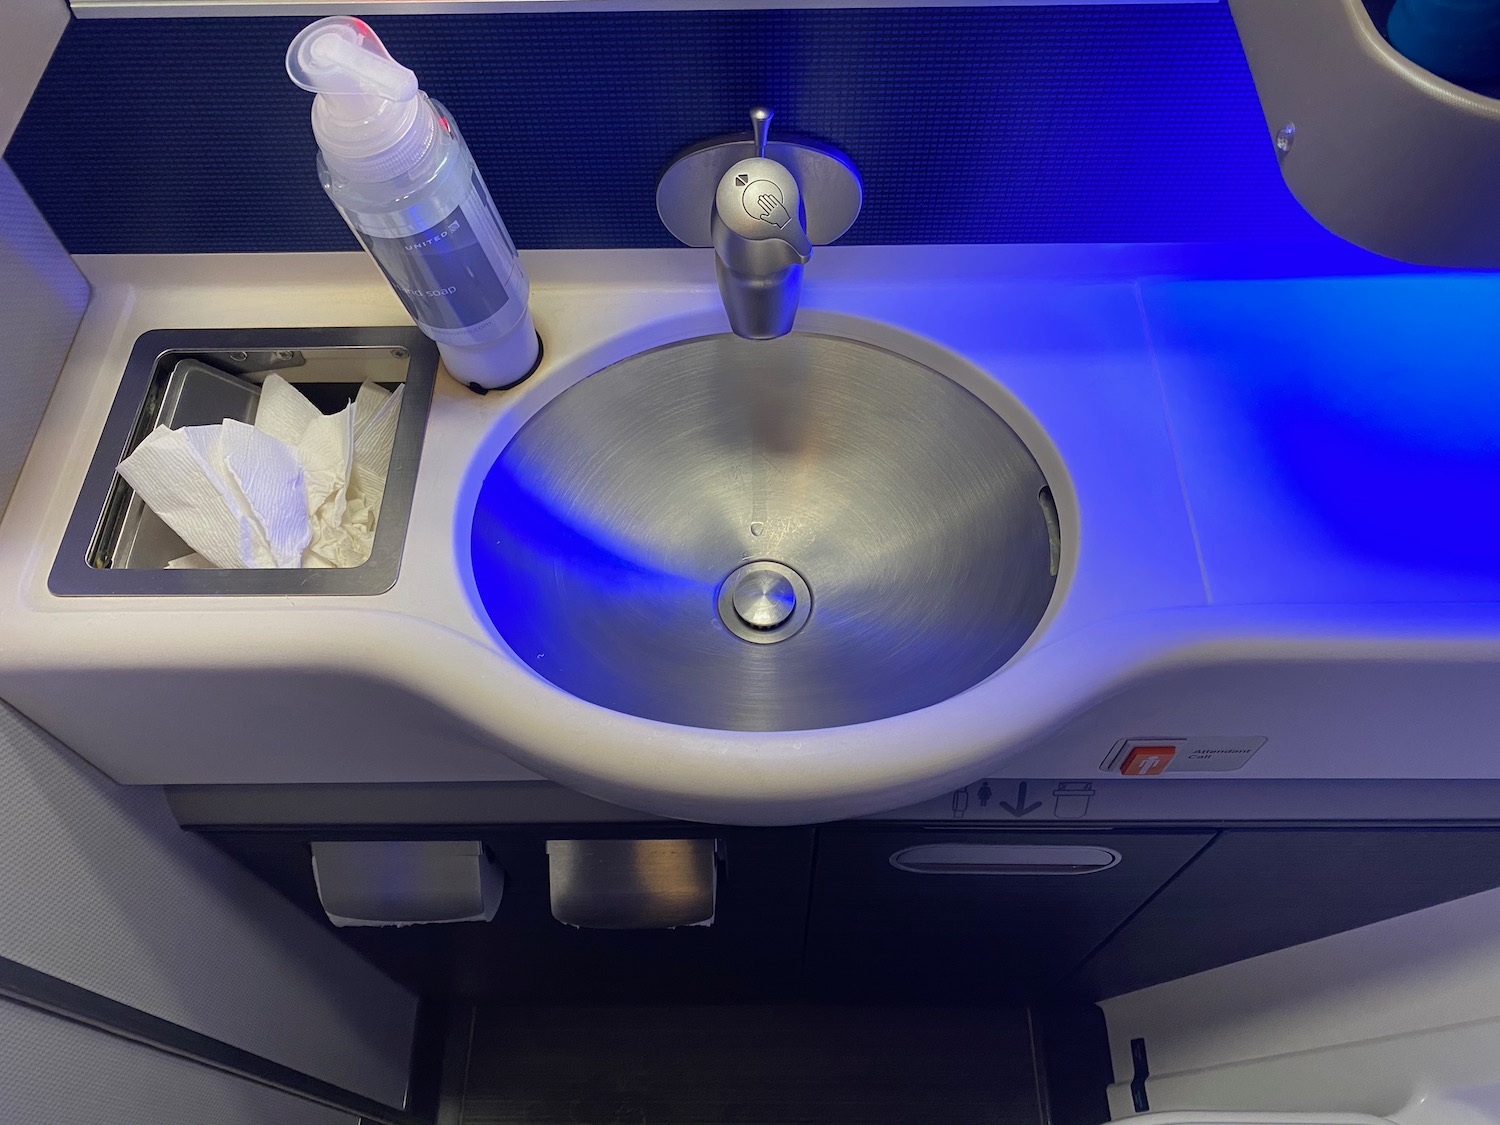 a sink with a blue light